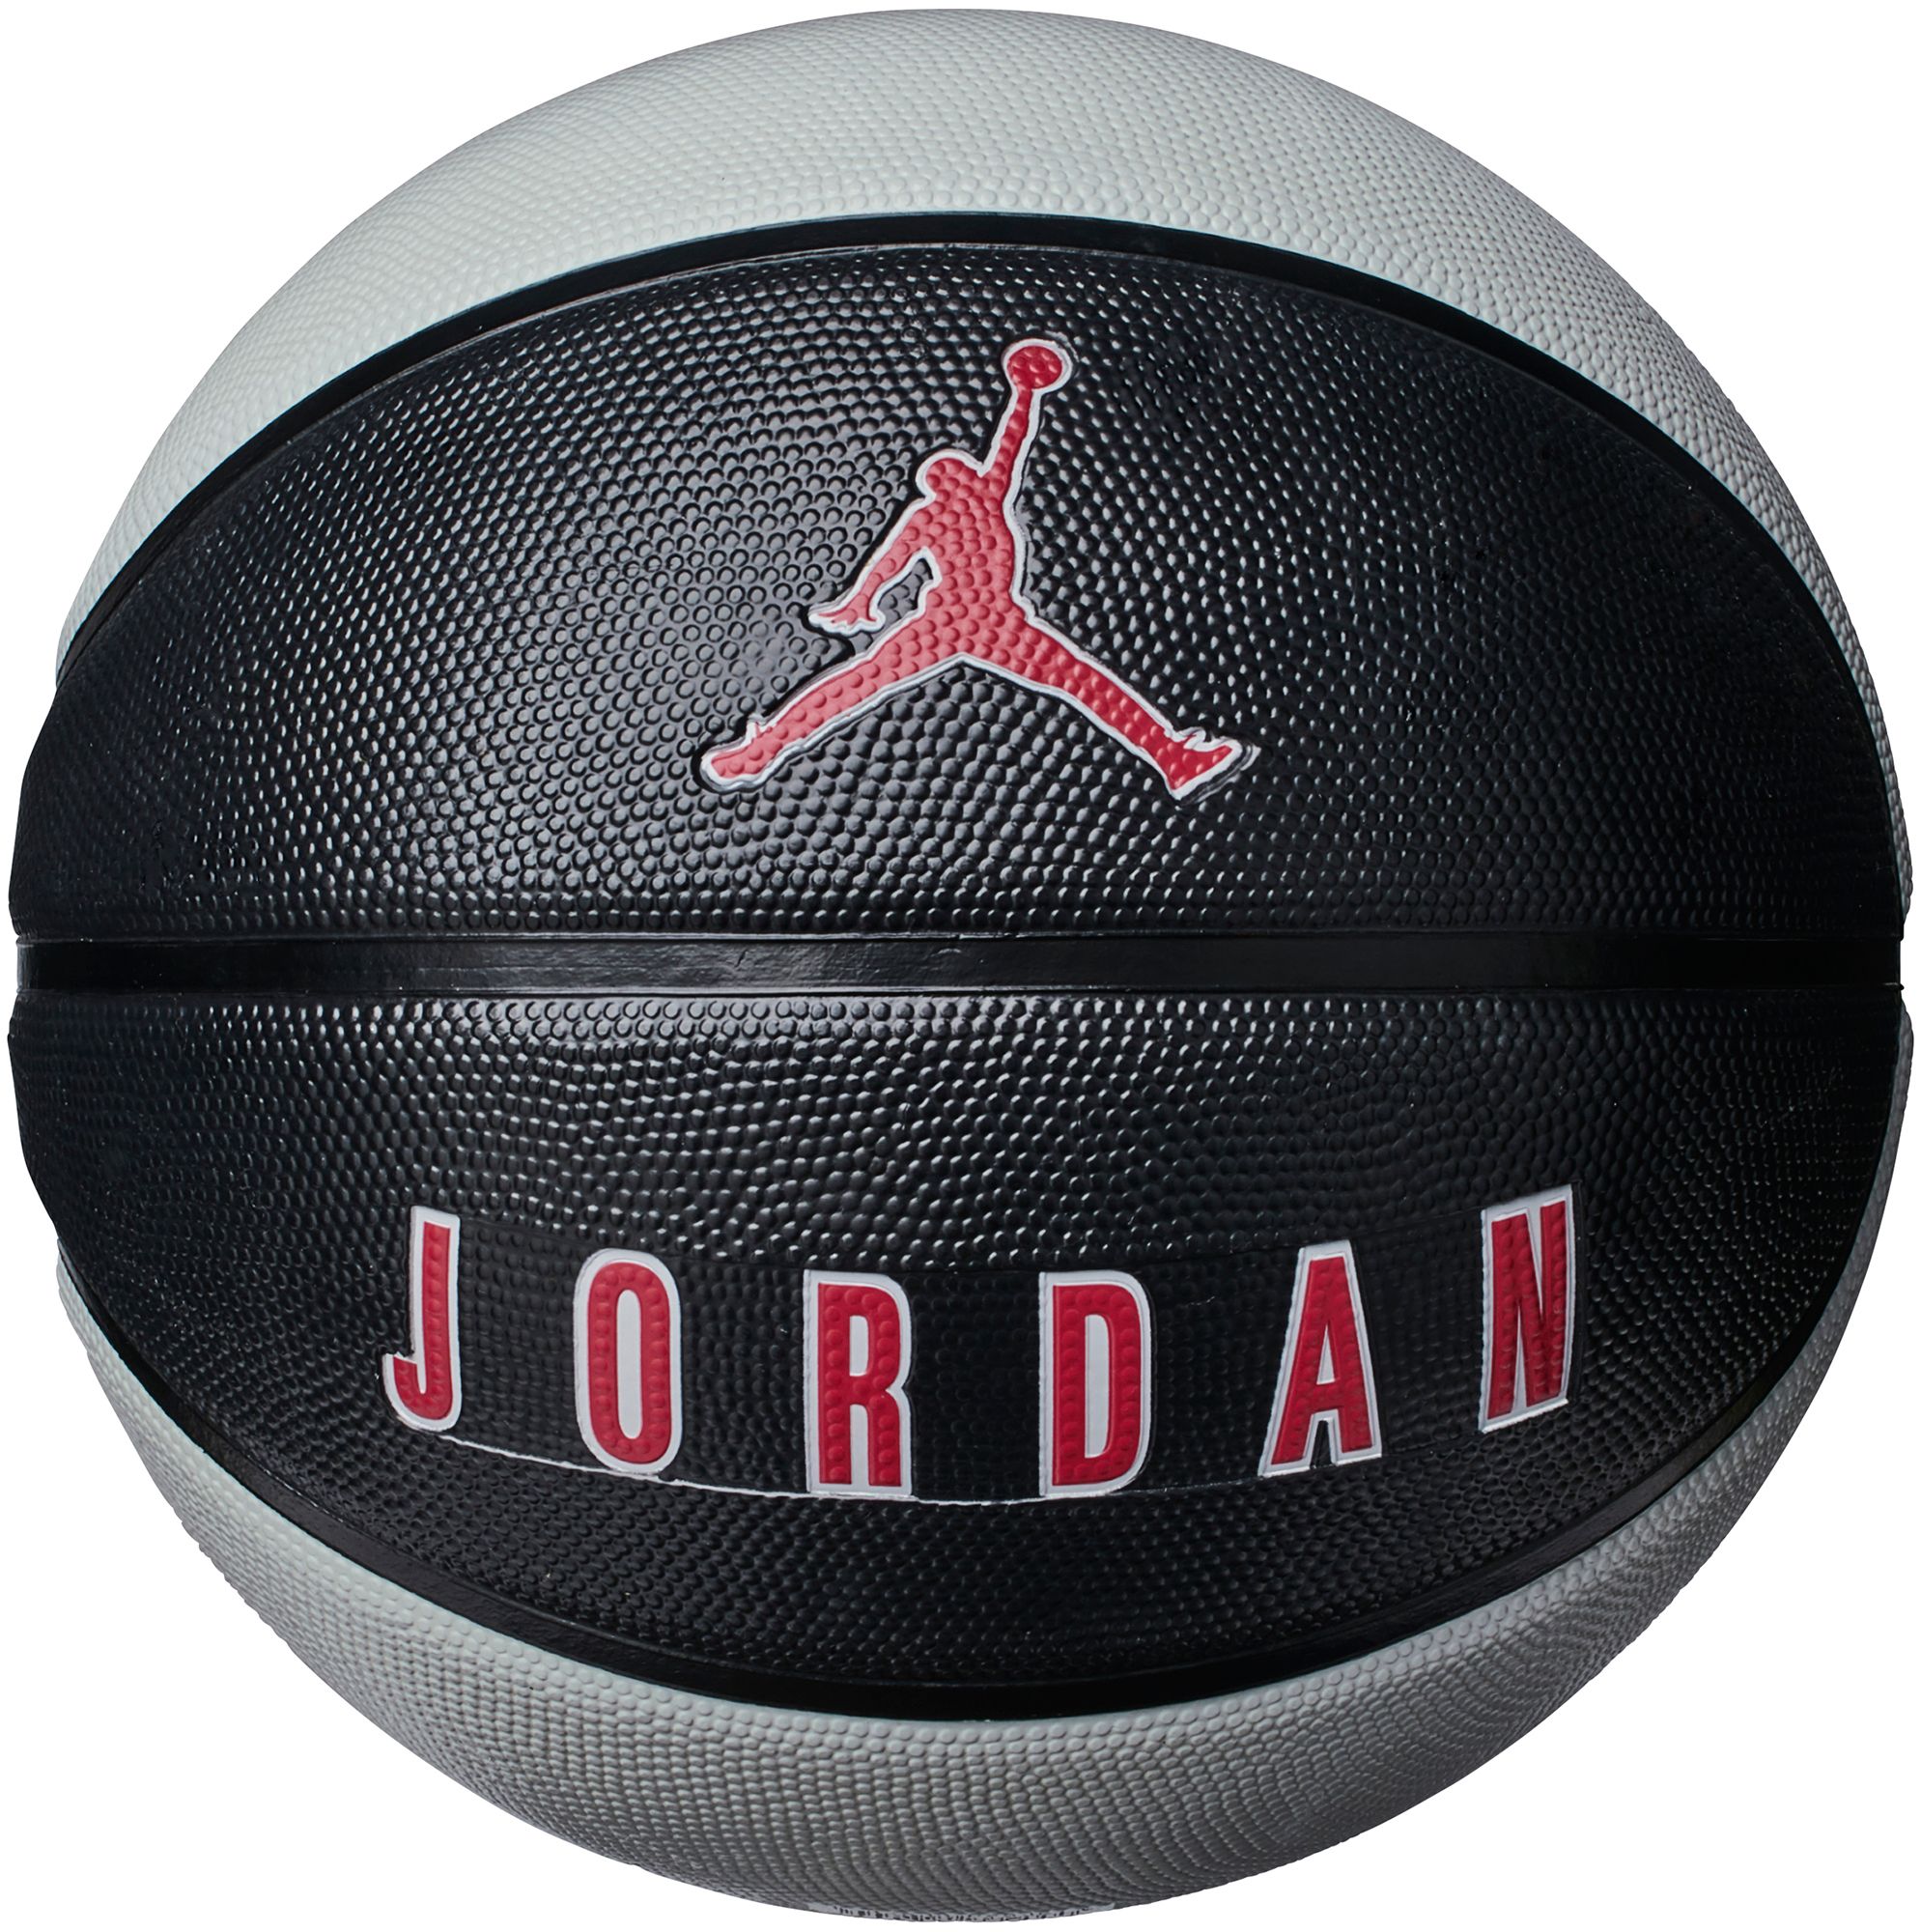 nike jordan basketball ball